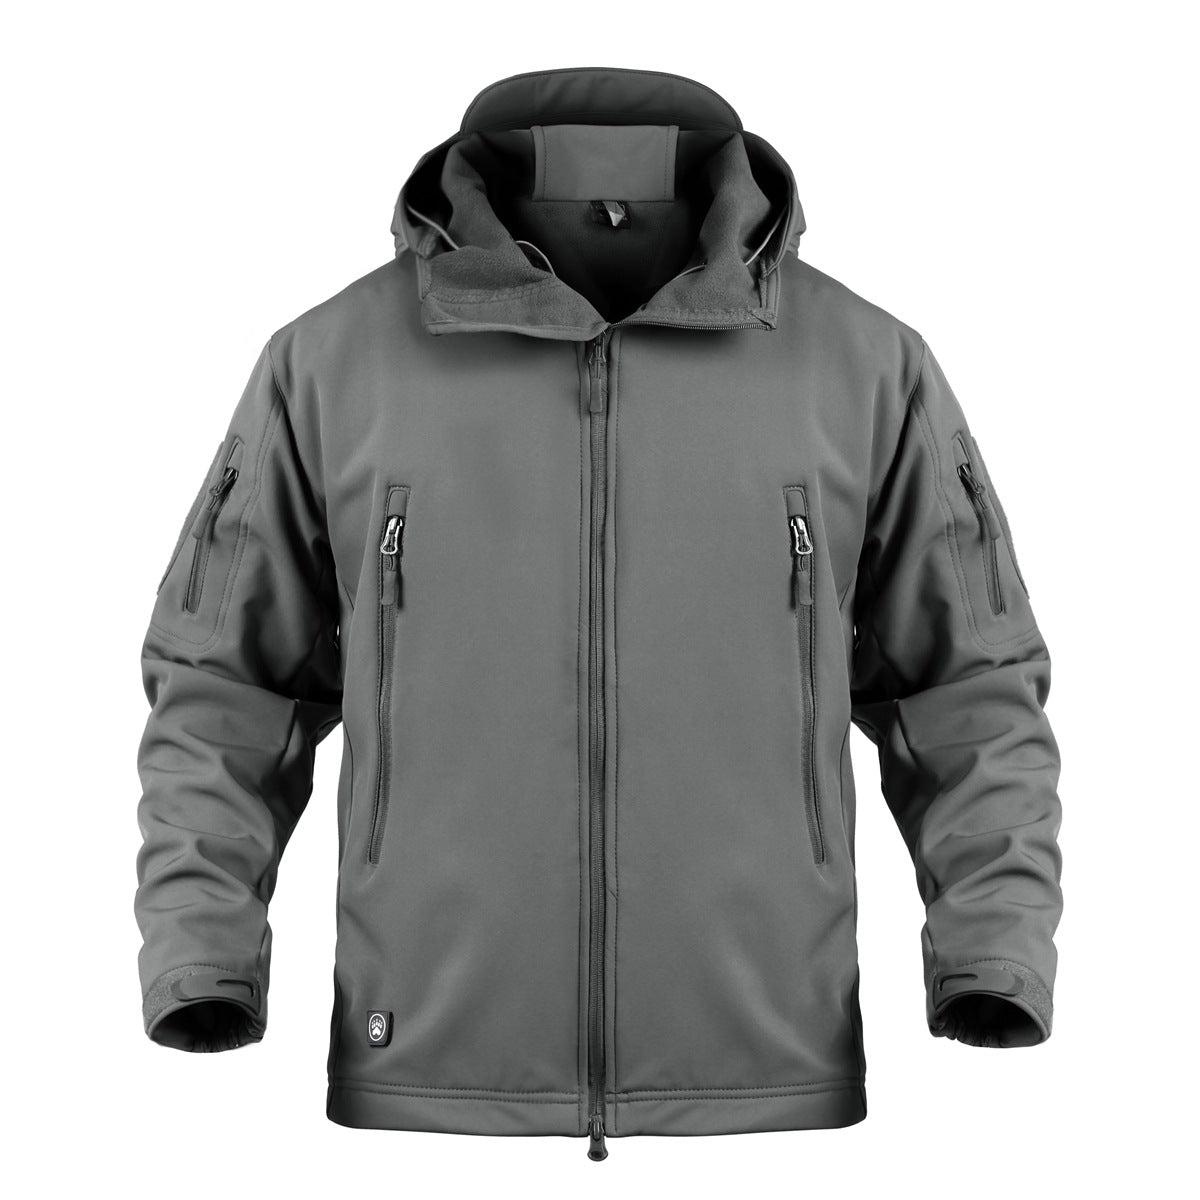 Rothco Tactical Waterproof Jacket Fleece Lined Military Army Hooded Coat |  eBay